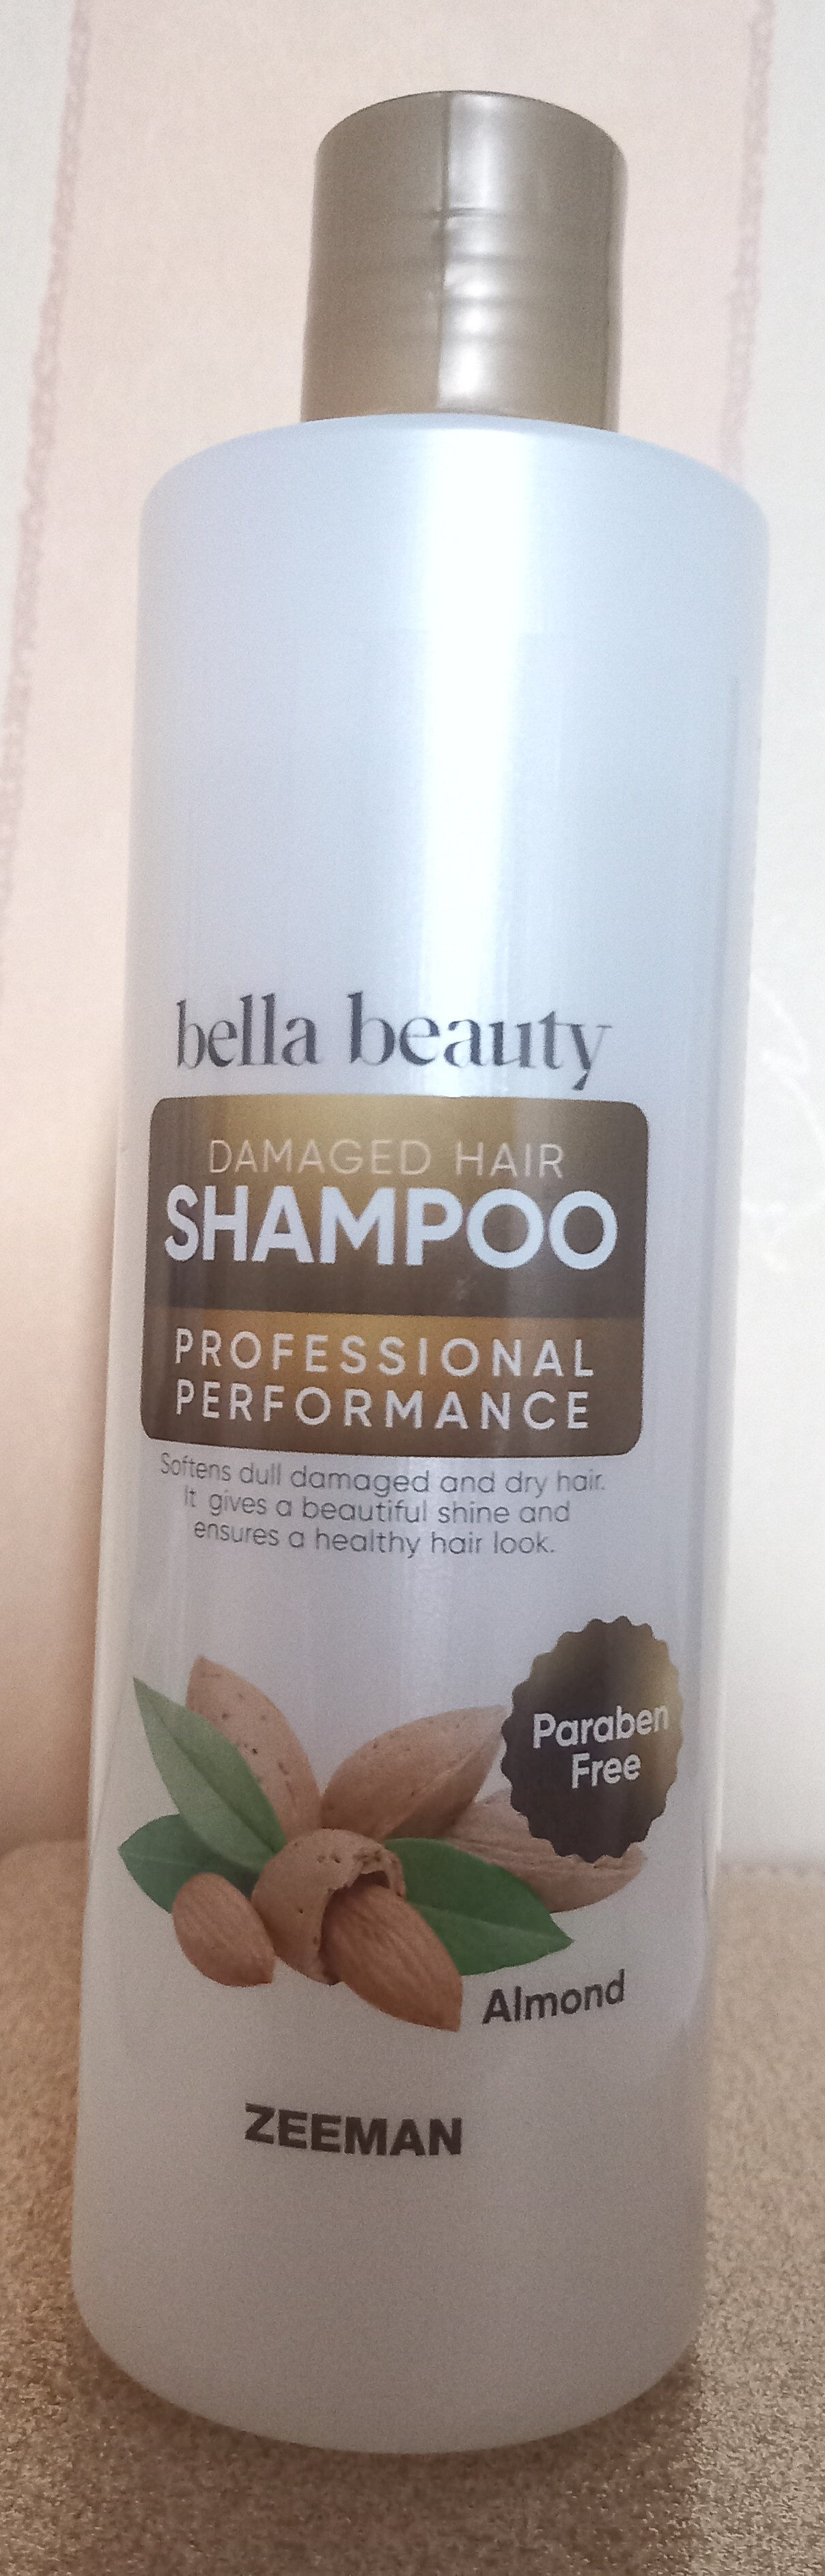 Bella Beauty DAMAGED HAIR SHAMPOO PROFESSIONNAL PERFORMANCE - Produkt - fr